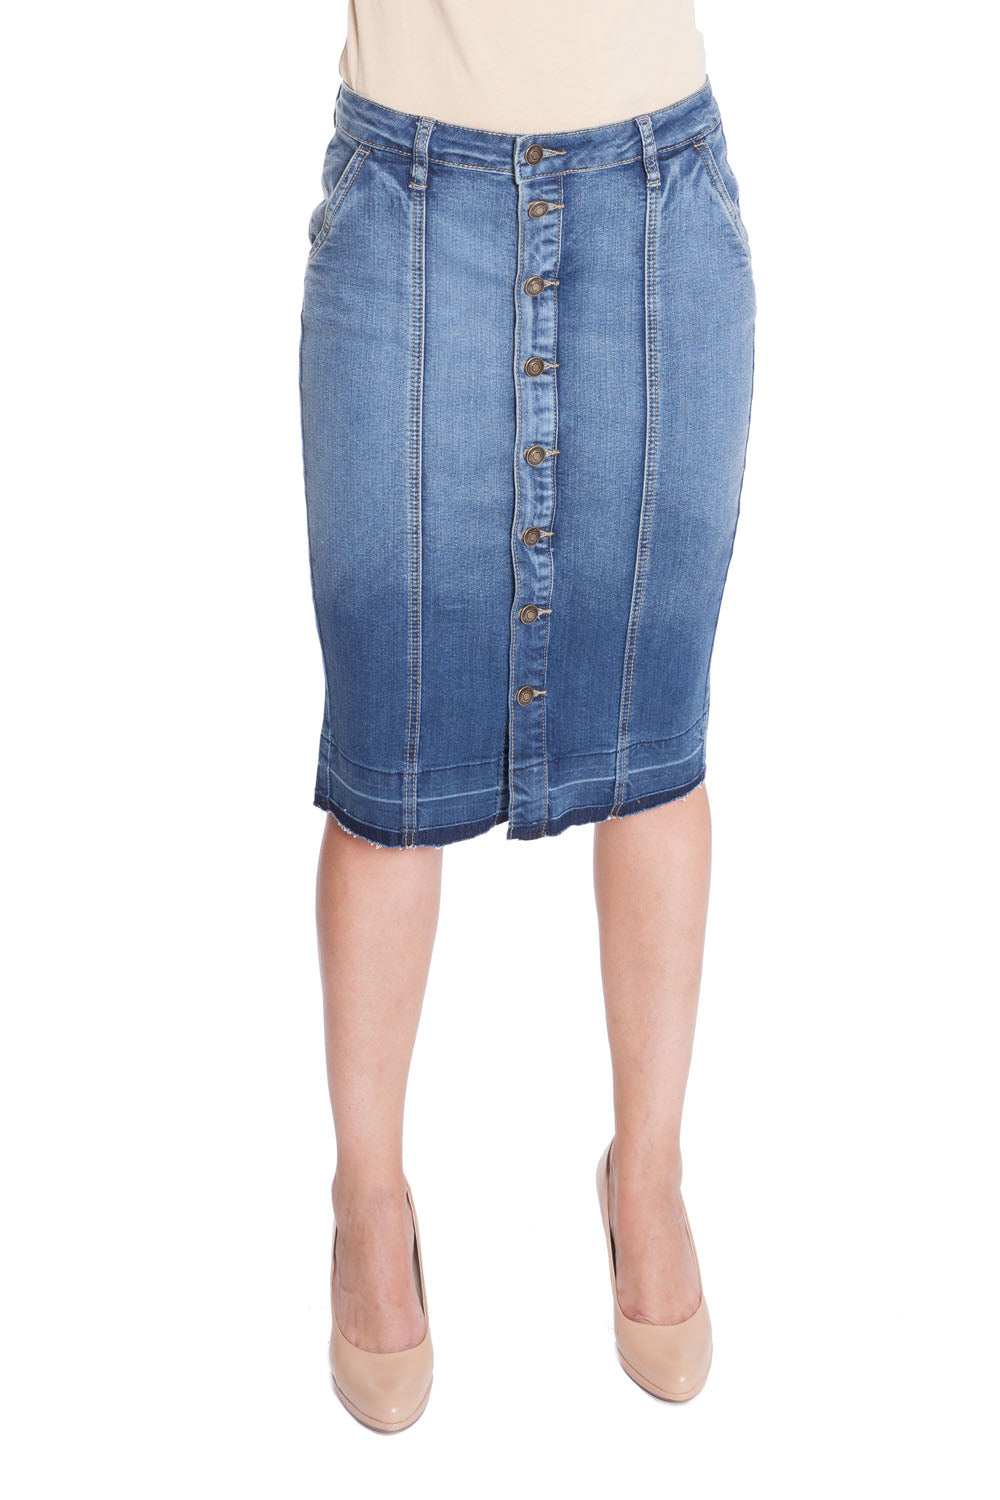 Esteez MONTREAL Denim Skirt - Below the Knee Jean Skirt BLUE